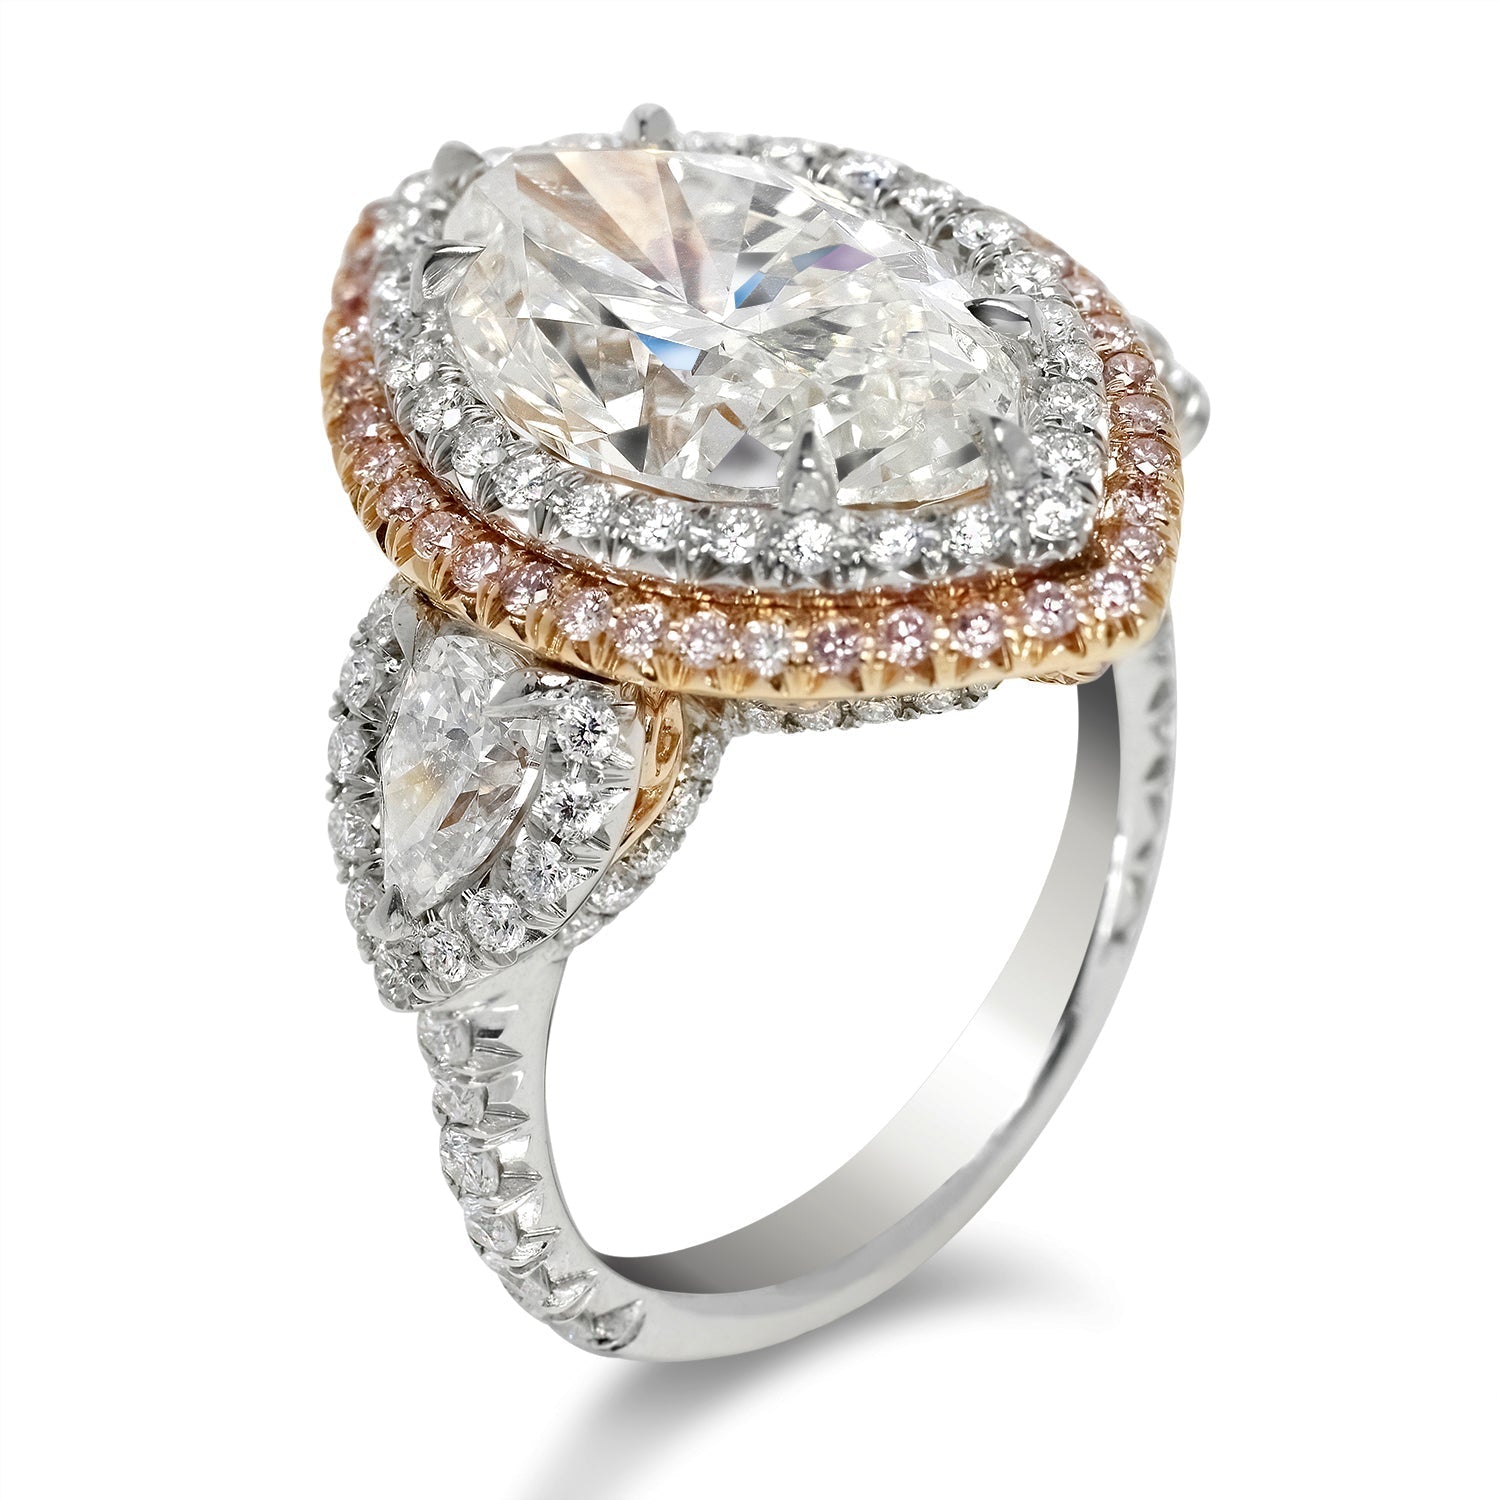 Diamond Ring Marquise Cut 8 Carat Pink Diamond Halo Ring in Platinum Side View